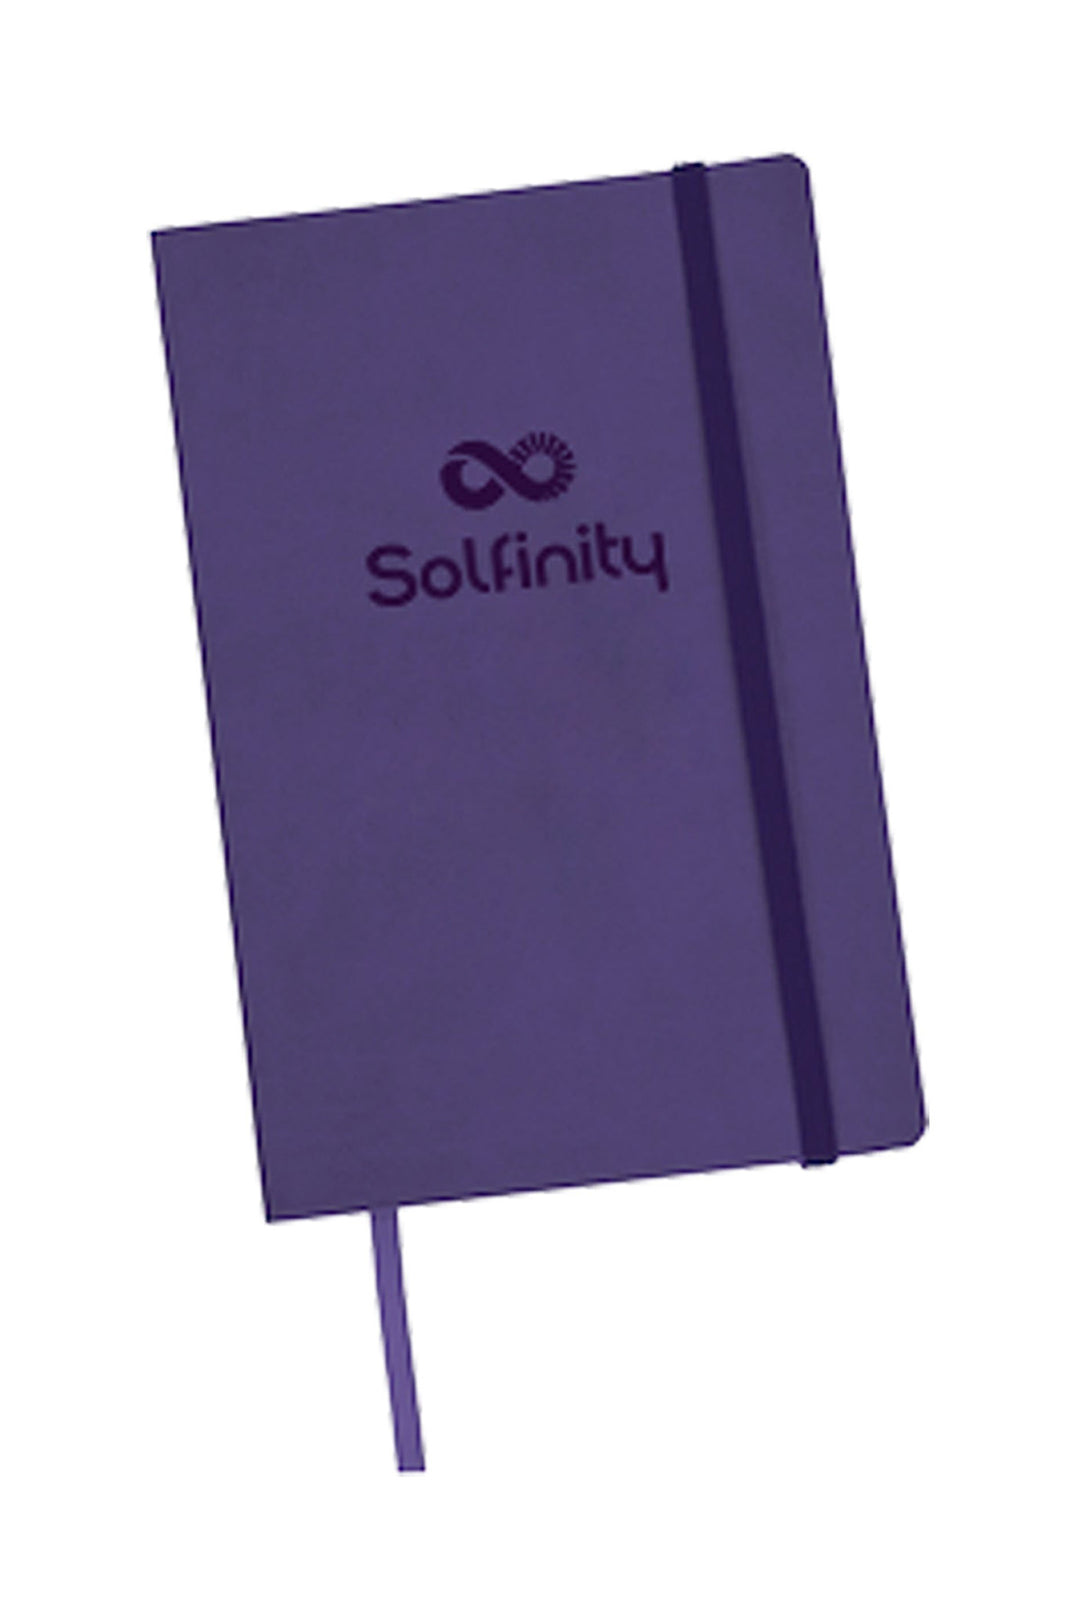 Solfinity 8x5 Notebook